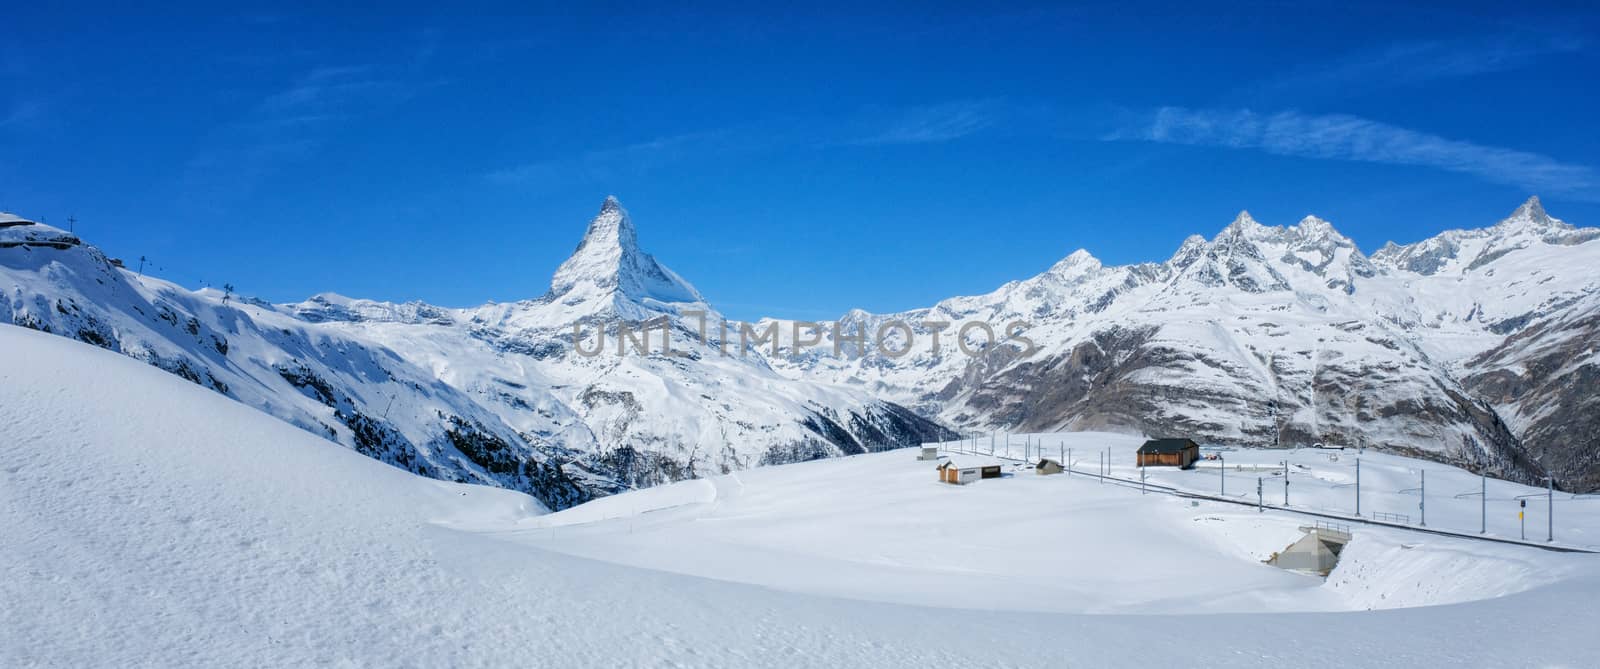 Panoramic beautiful view of snow mountain Matterhorn peak, Zerma by Surasak